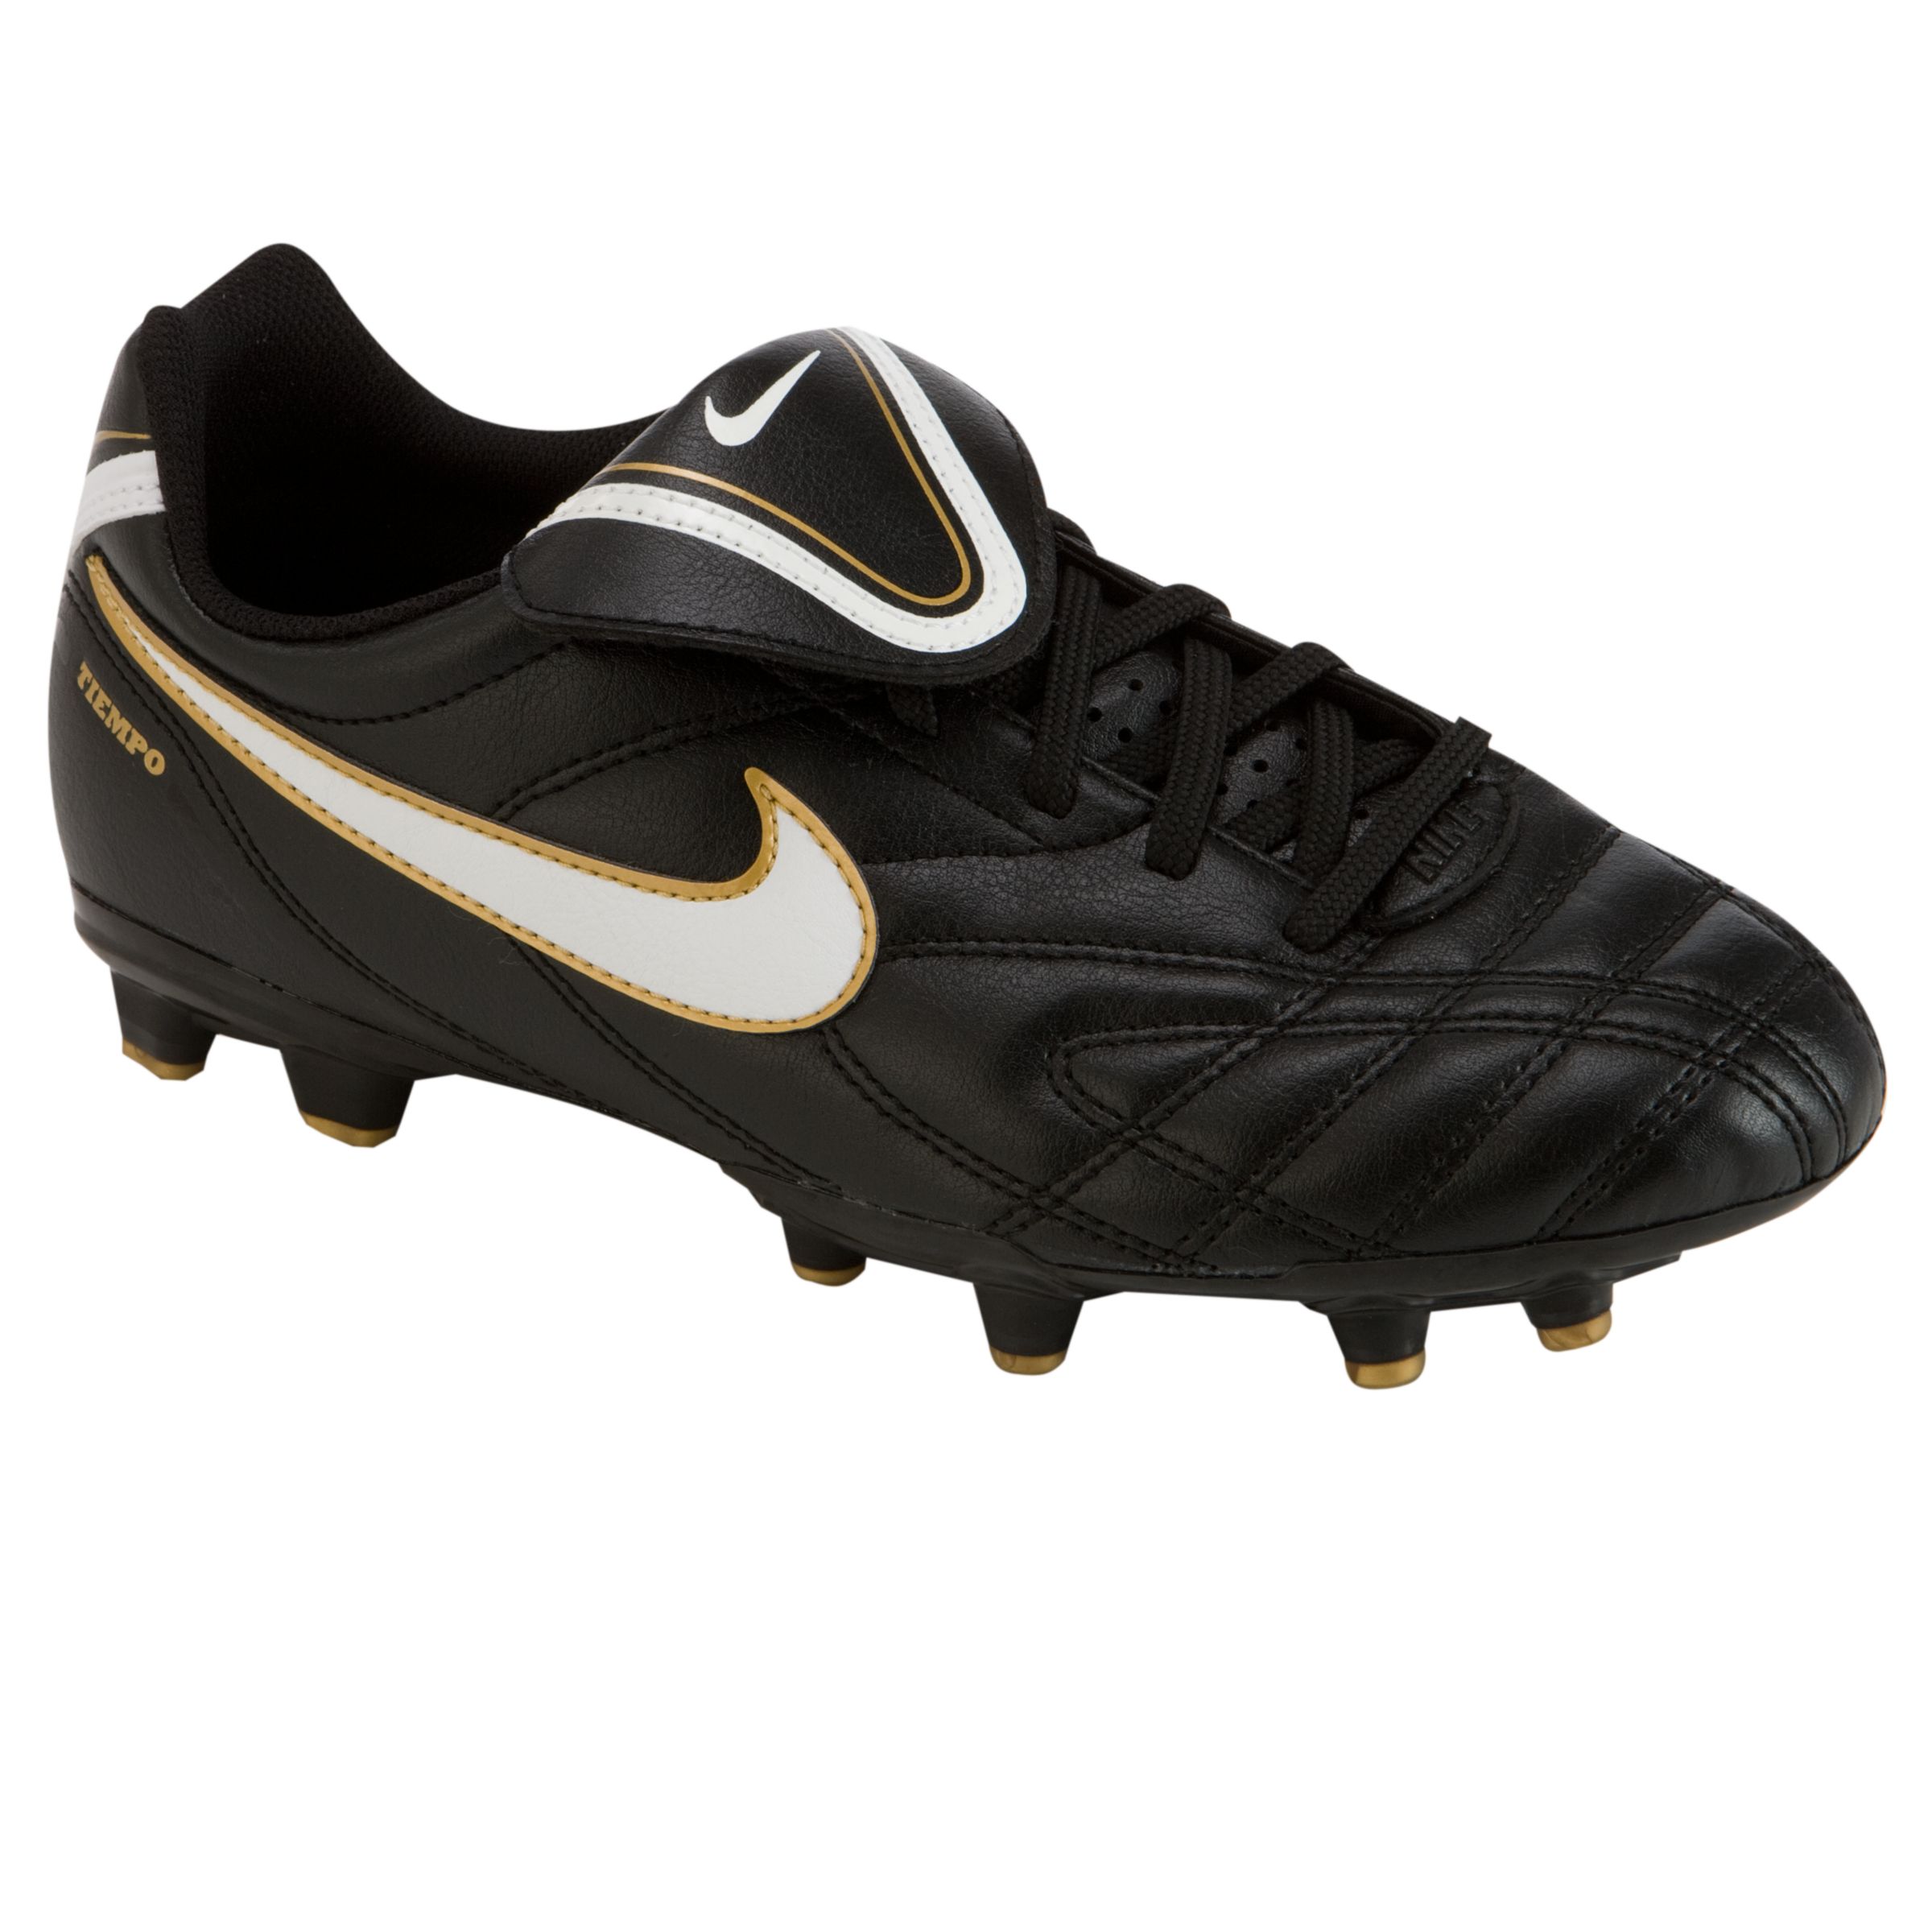 Nike Tiempo Studded Football Boots, Black